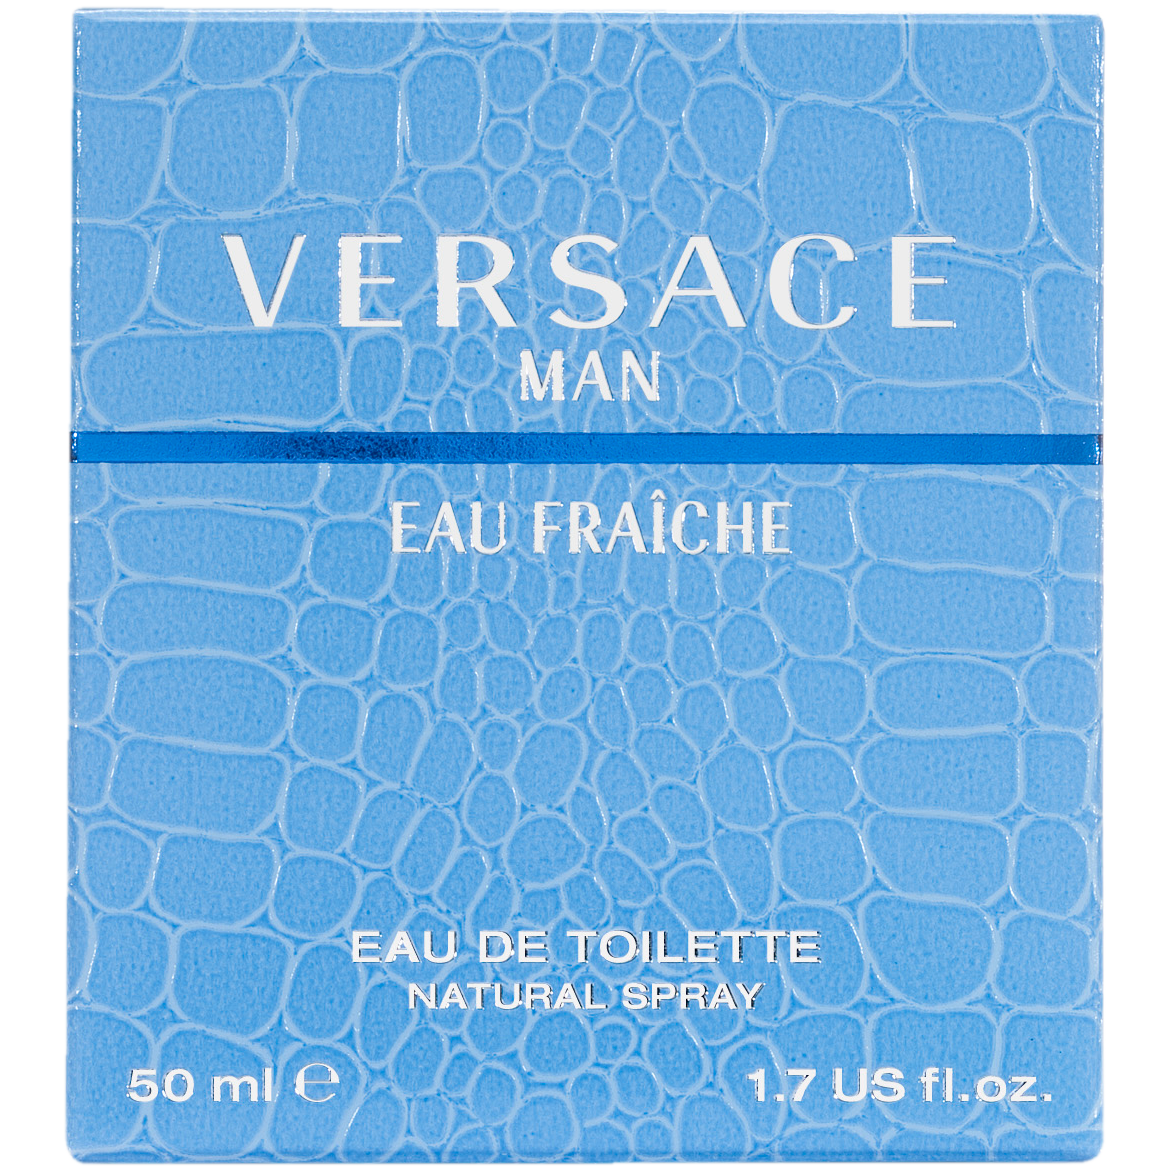 Мужская туалетная вода Versace Eau Fraiche, 50 мл